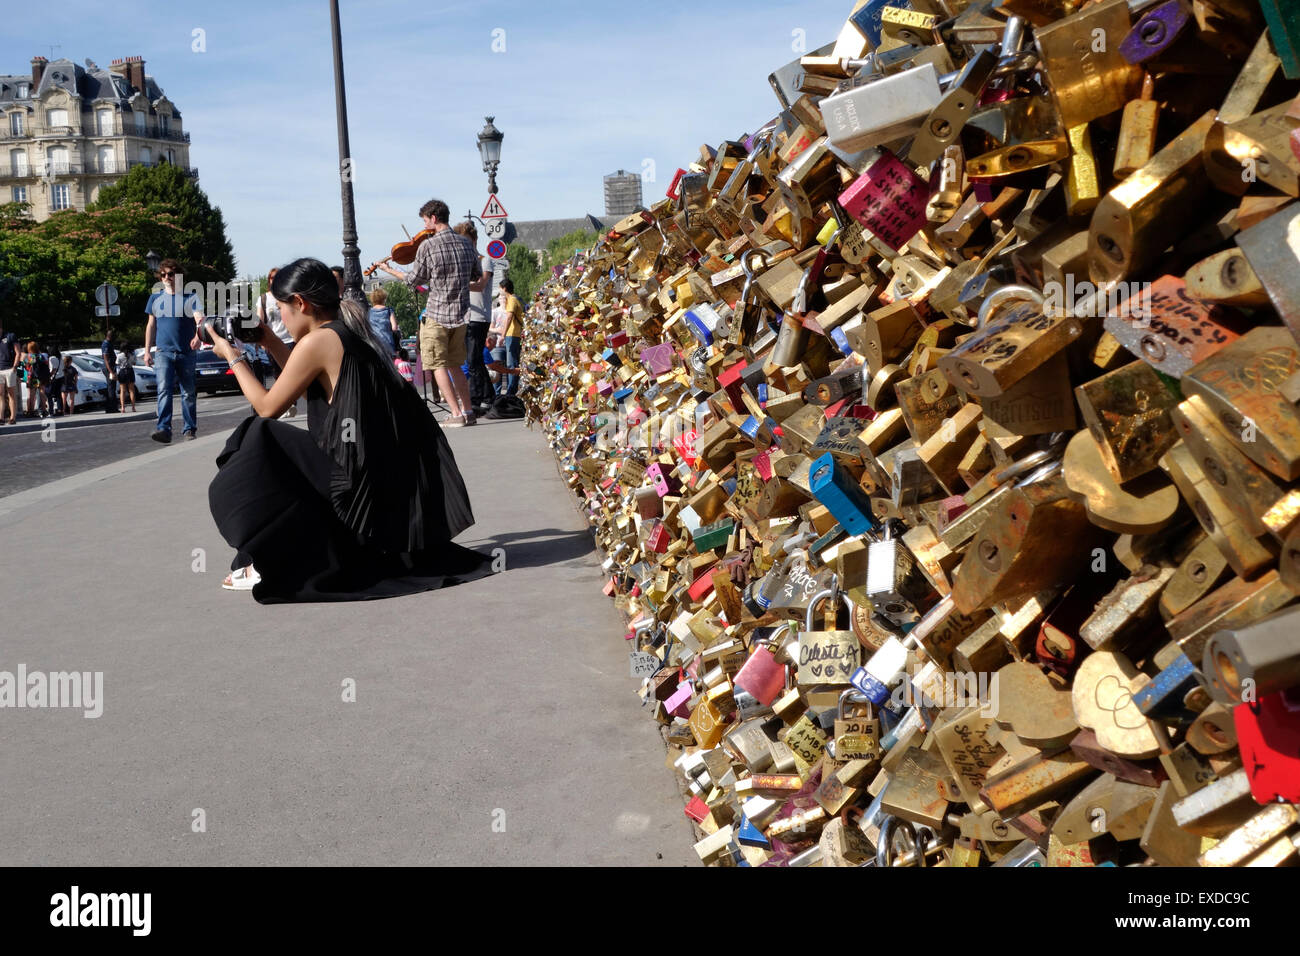 Asian girl photographing Love locks, lockers, symbolizing forever lasting love, at Pont de l'Archeveche, Paris, France. Stock Photo